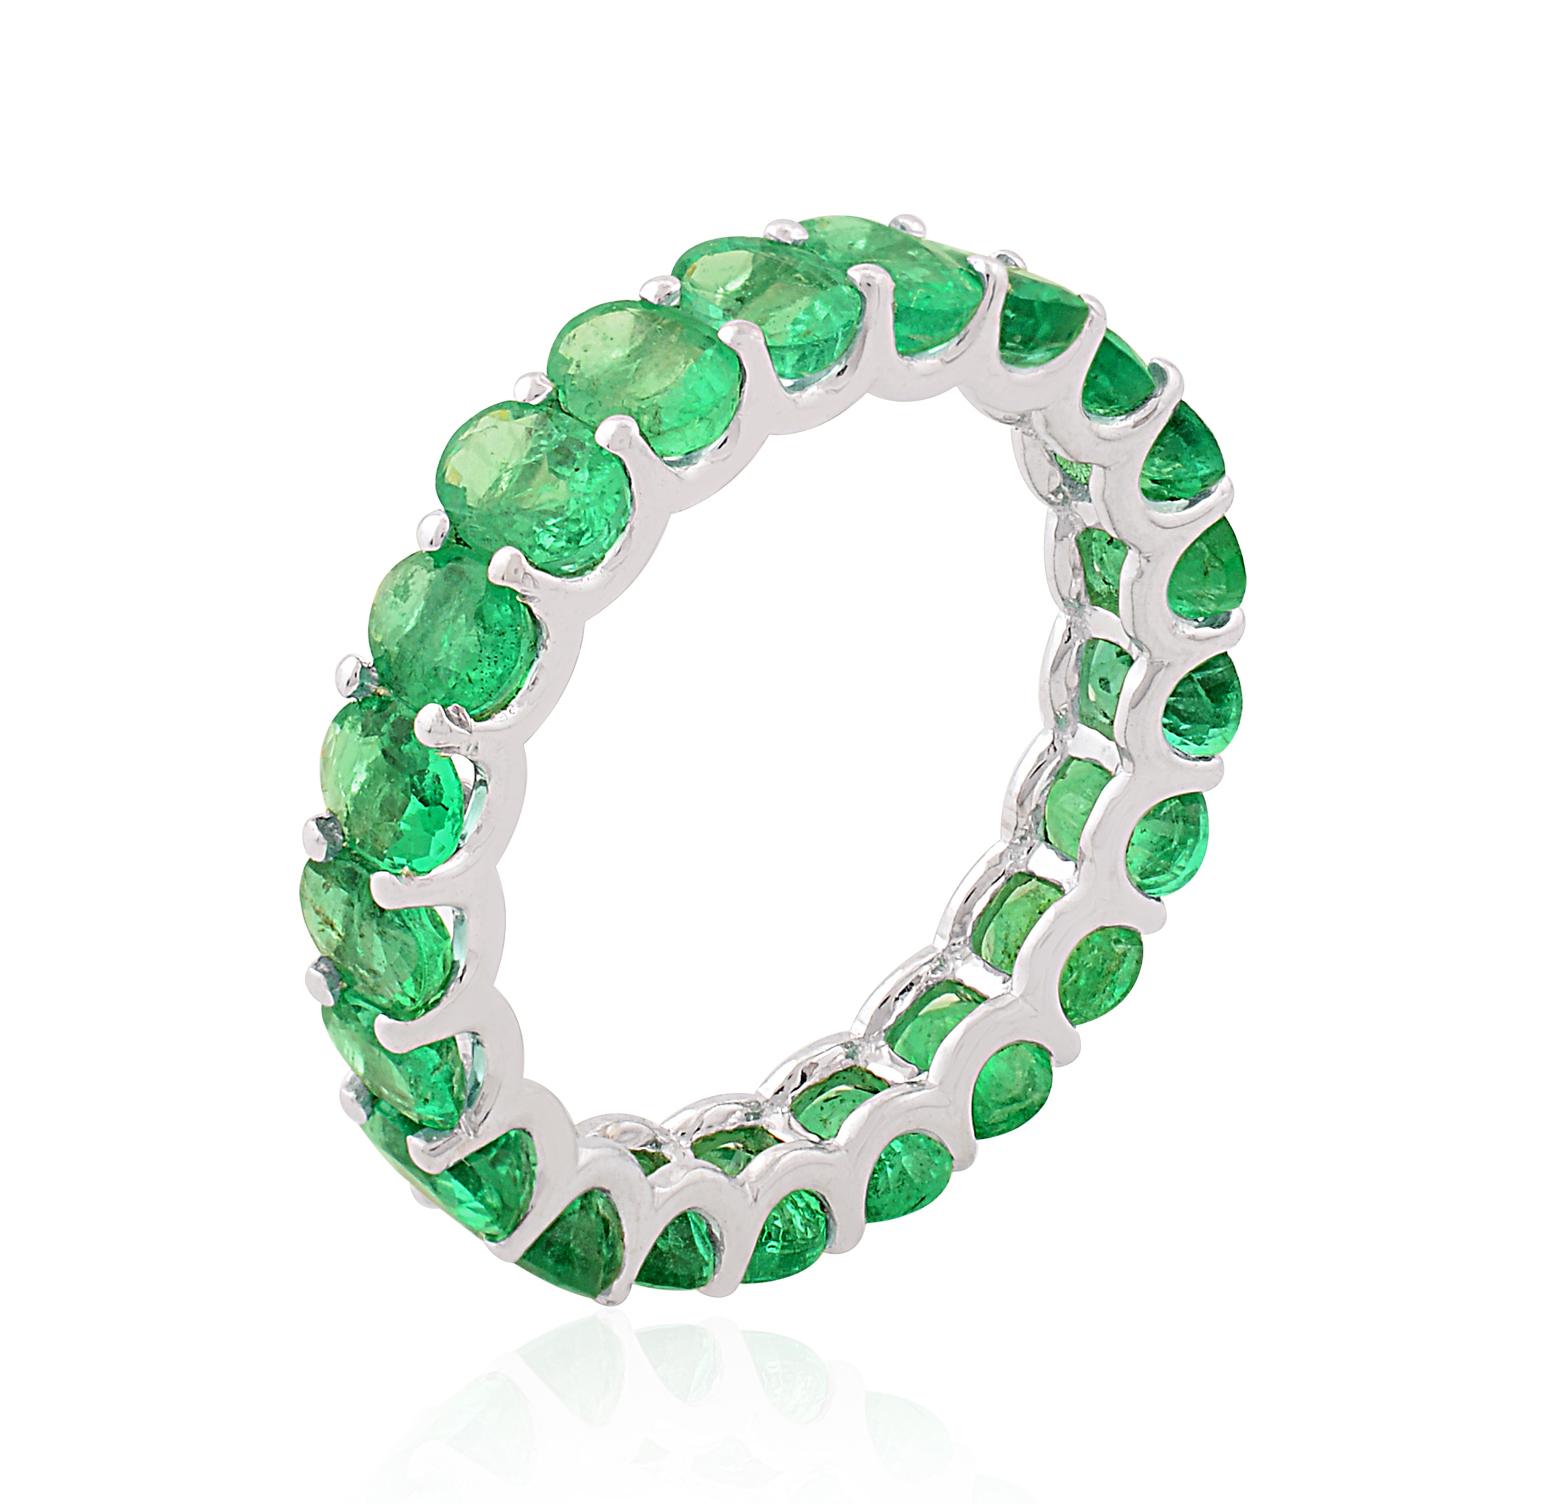 Modern 4.40 Carat Zambian Emerald Gemstone Band Ring 18k White Gold Handmade Jewelry For Sale